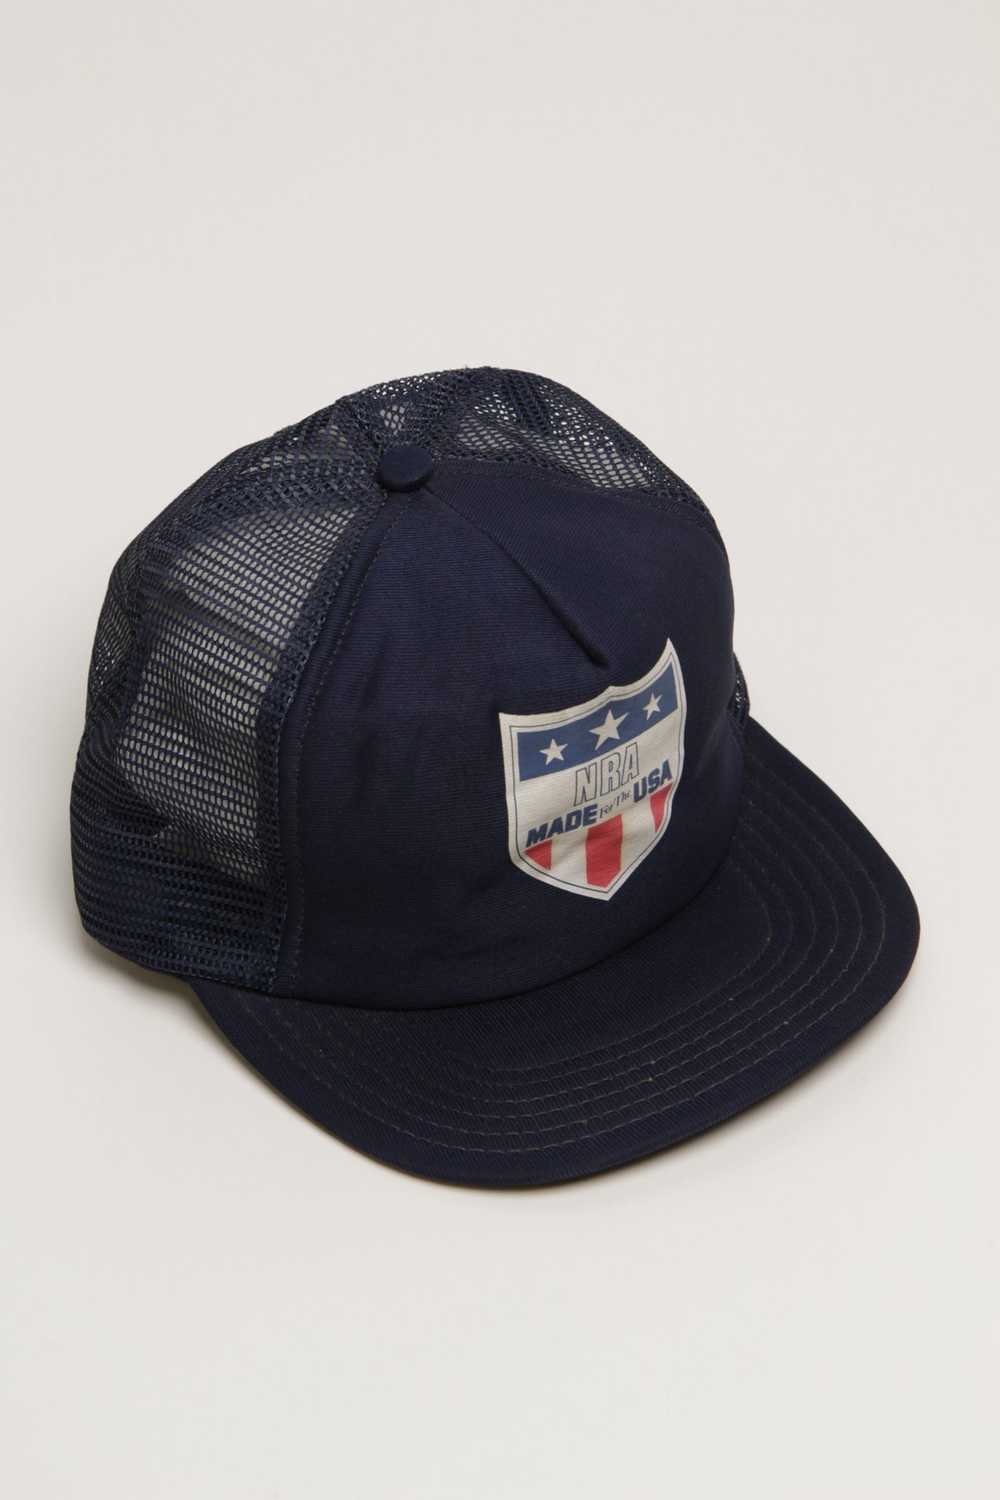 NRA Trucker Hat - image 2